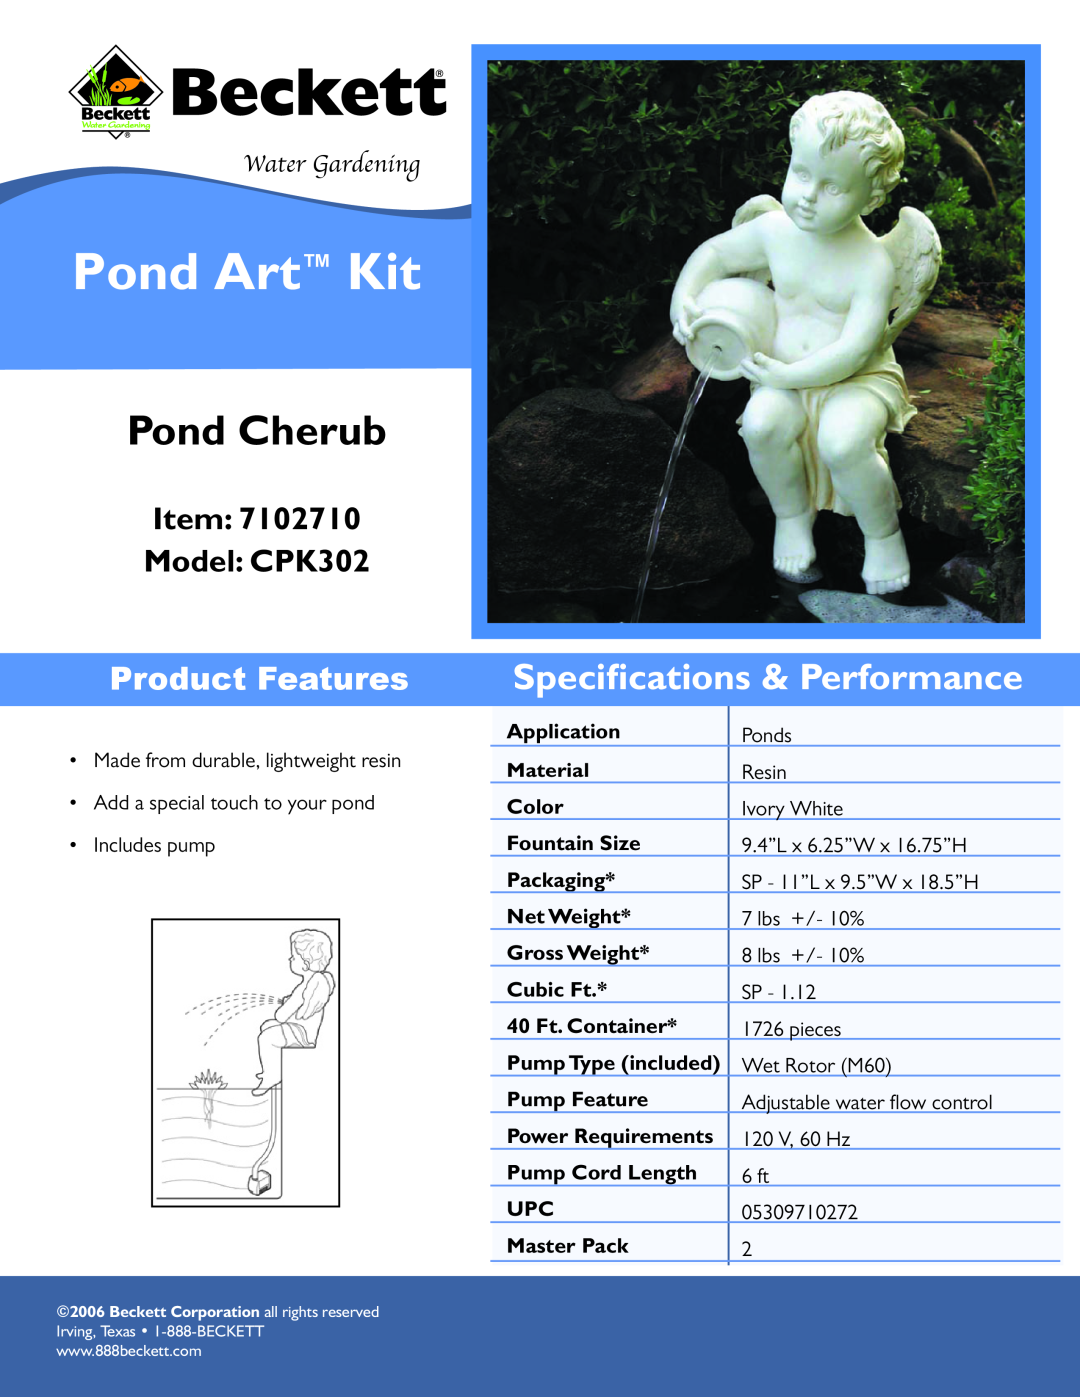 Beckett Water Gardening specifications Pond Art Kit, Pond Cherub, Speciﬁcations & Performance, Item Model CPK302 